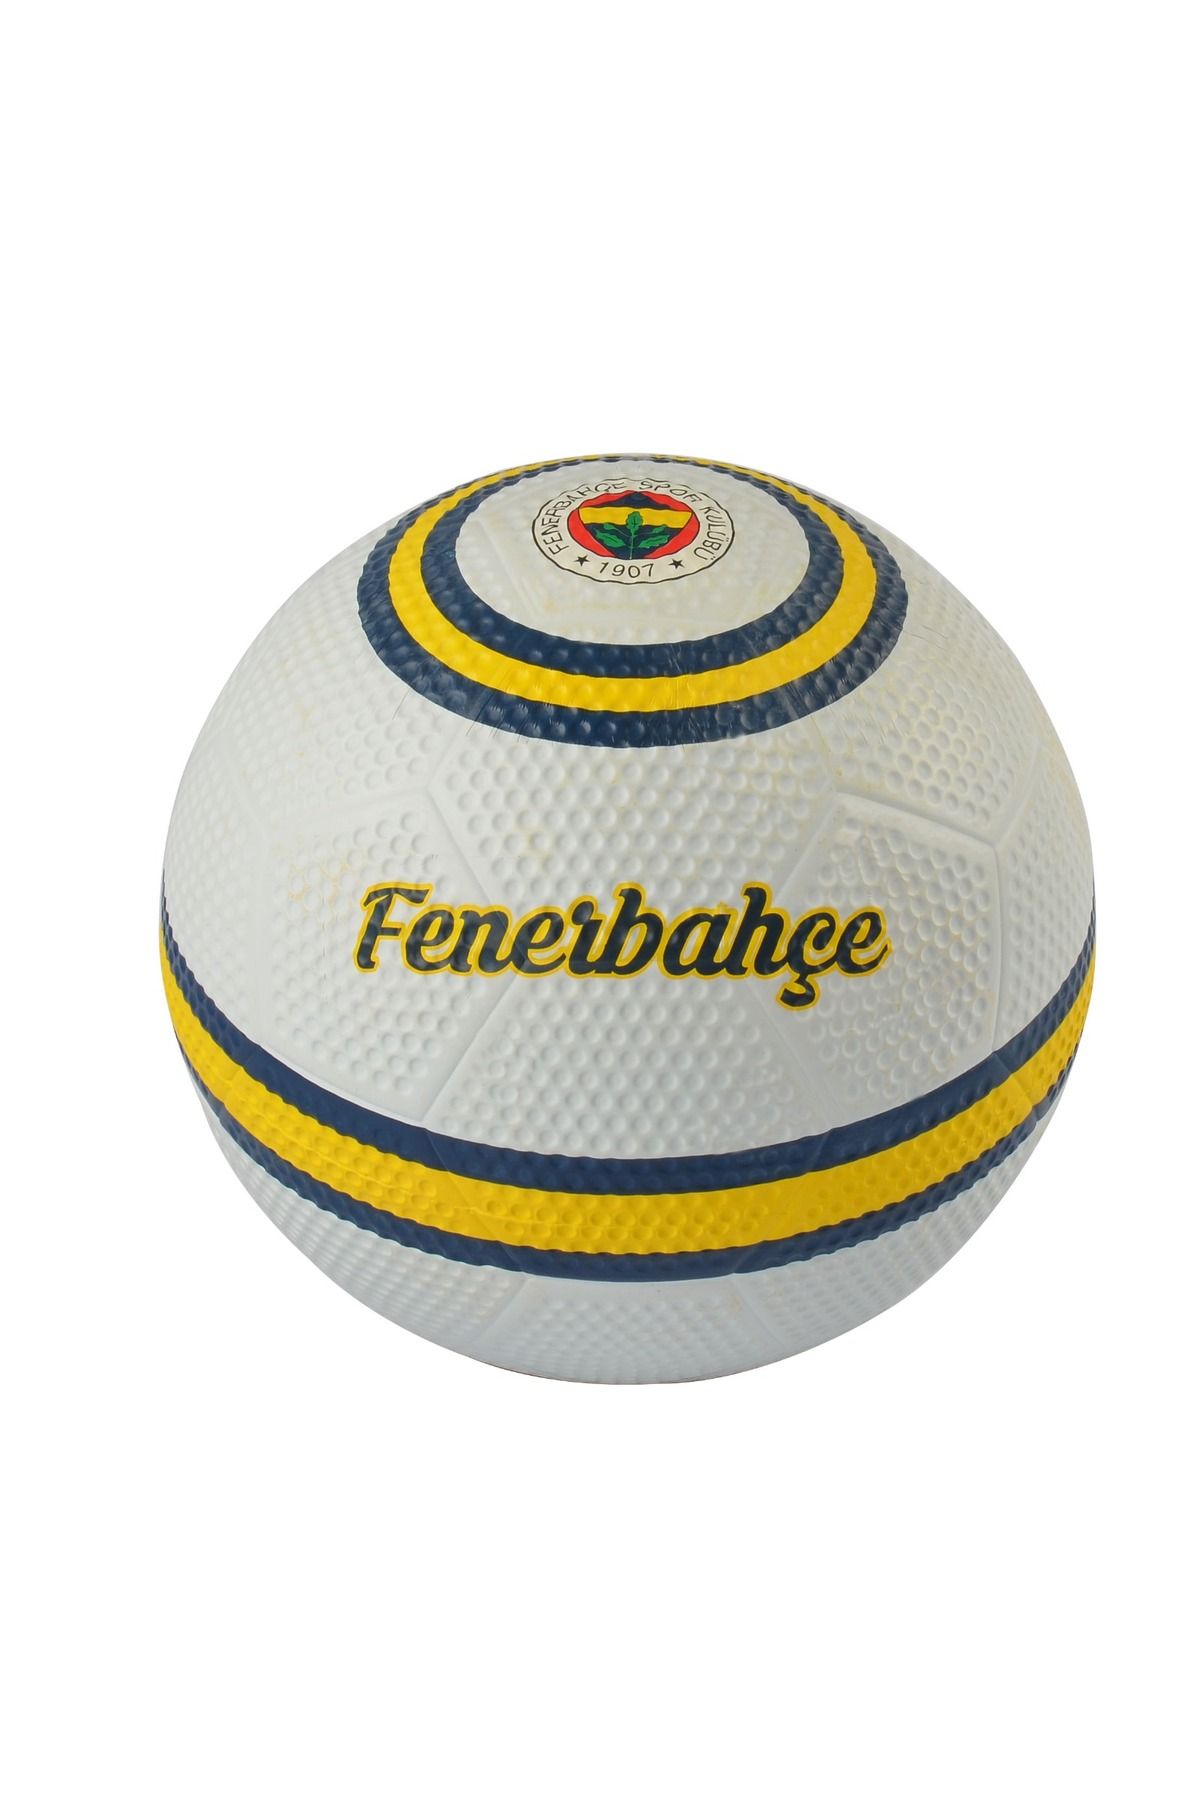 Fenerbahçe 2024 YENİ SEZON LİSANSLI ORİJİNAL FENERBAHÇE SKYLİNE-01 FUTBOL TOPU